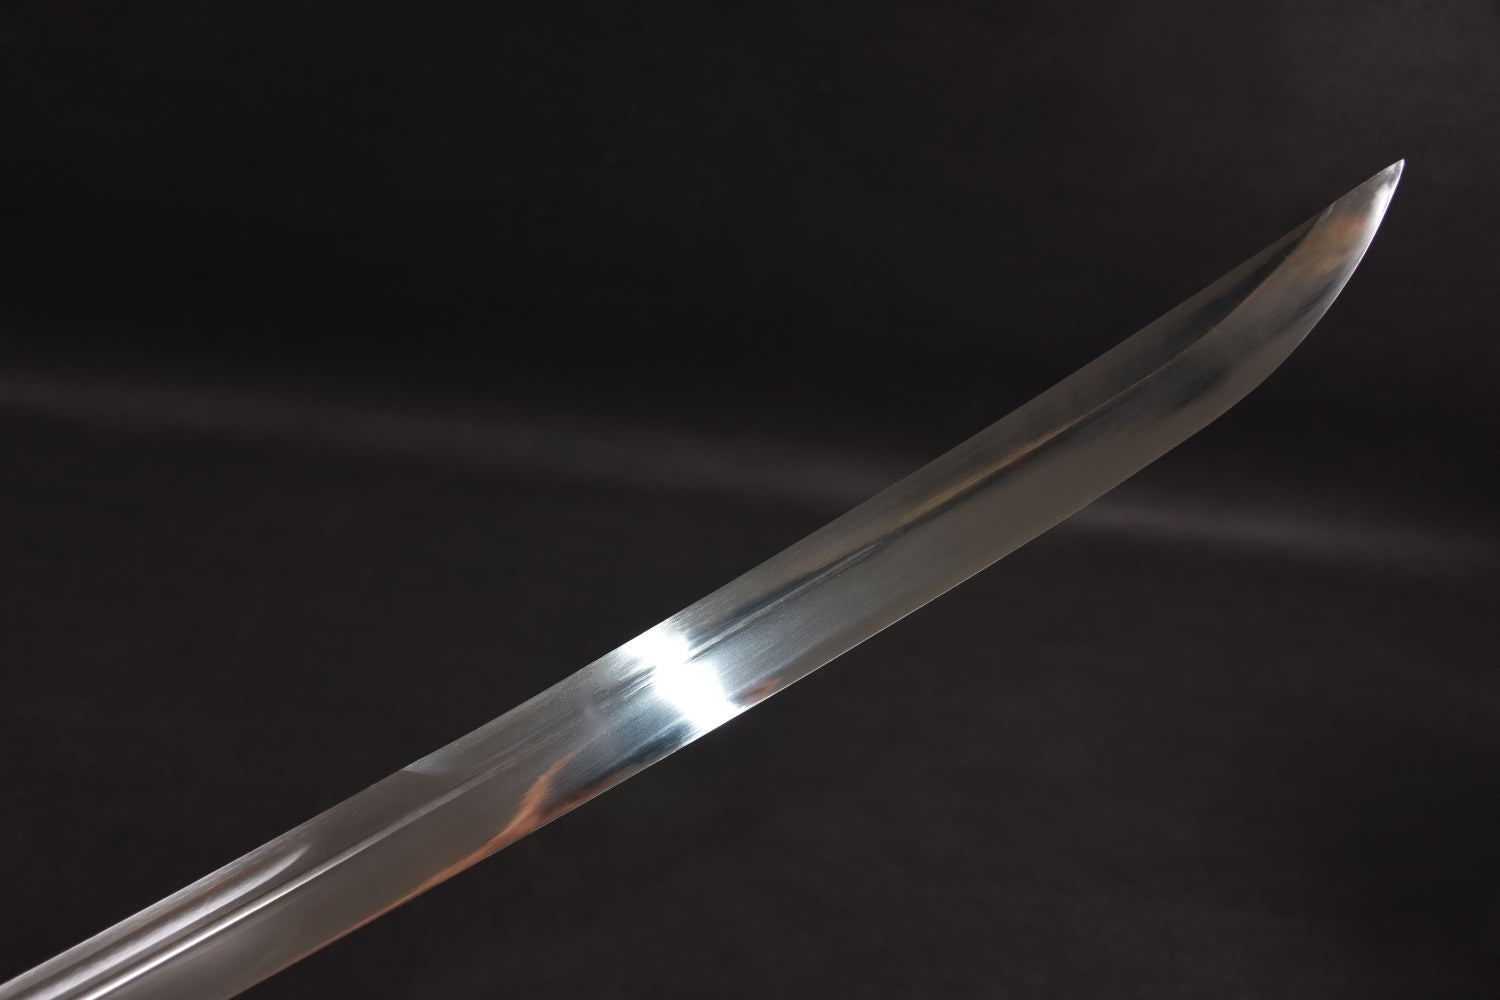 Dragon machete,Handmade(High carbon steel blade)Full tang - Chinese sword shop